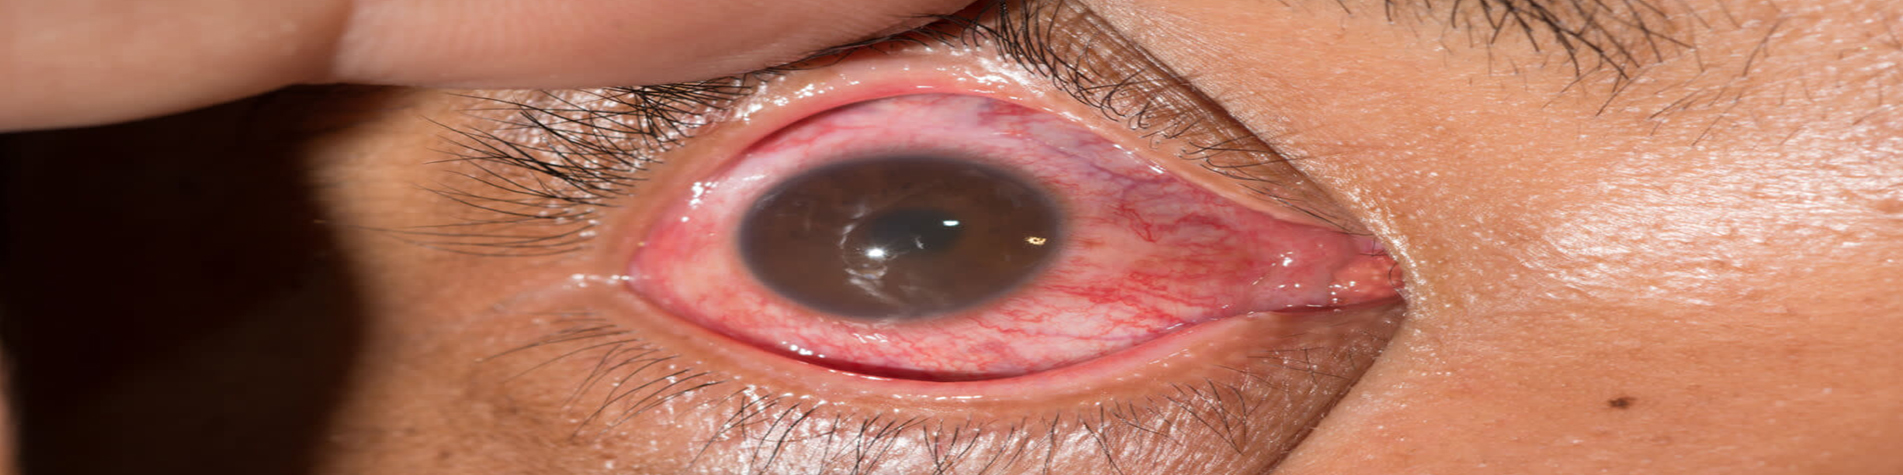 Uvea & Ocular Inflammation